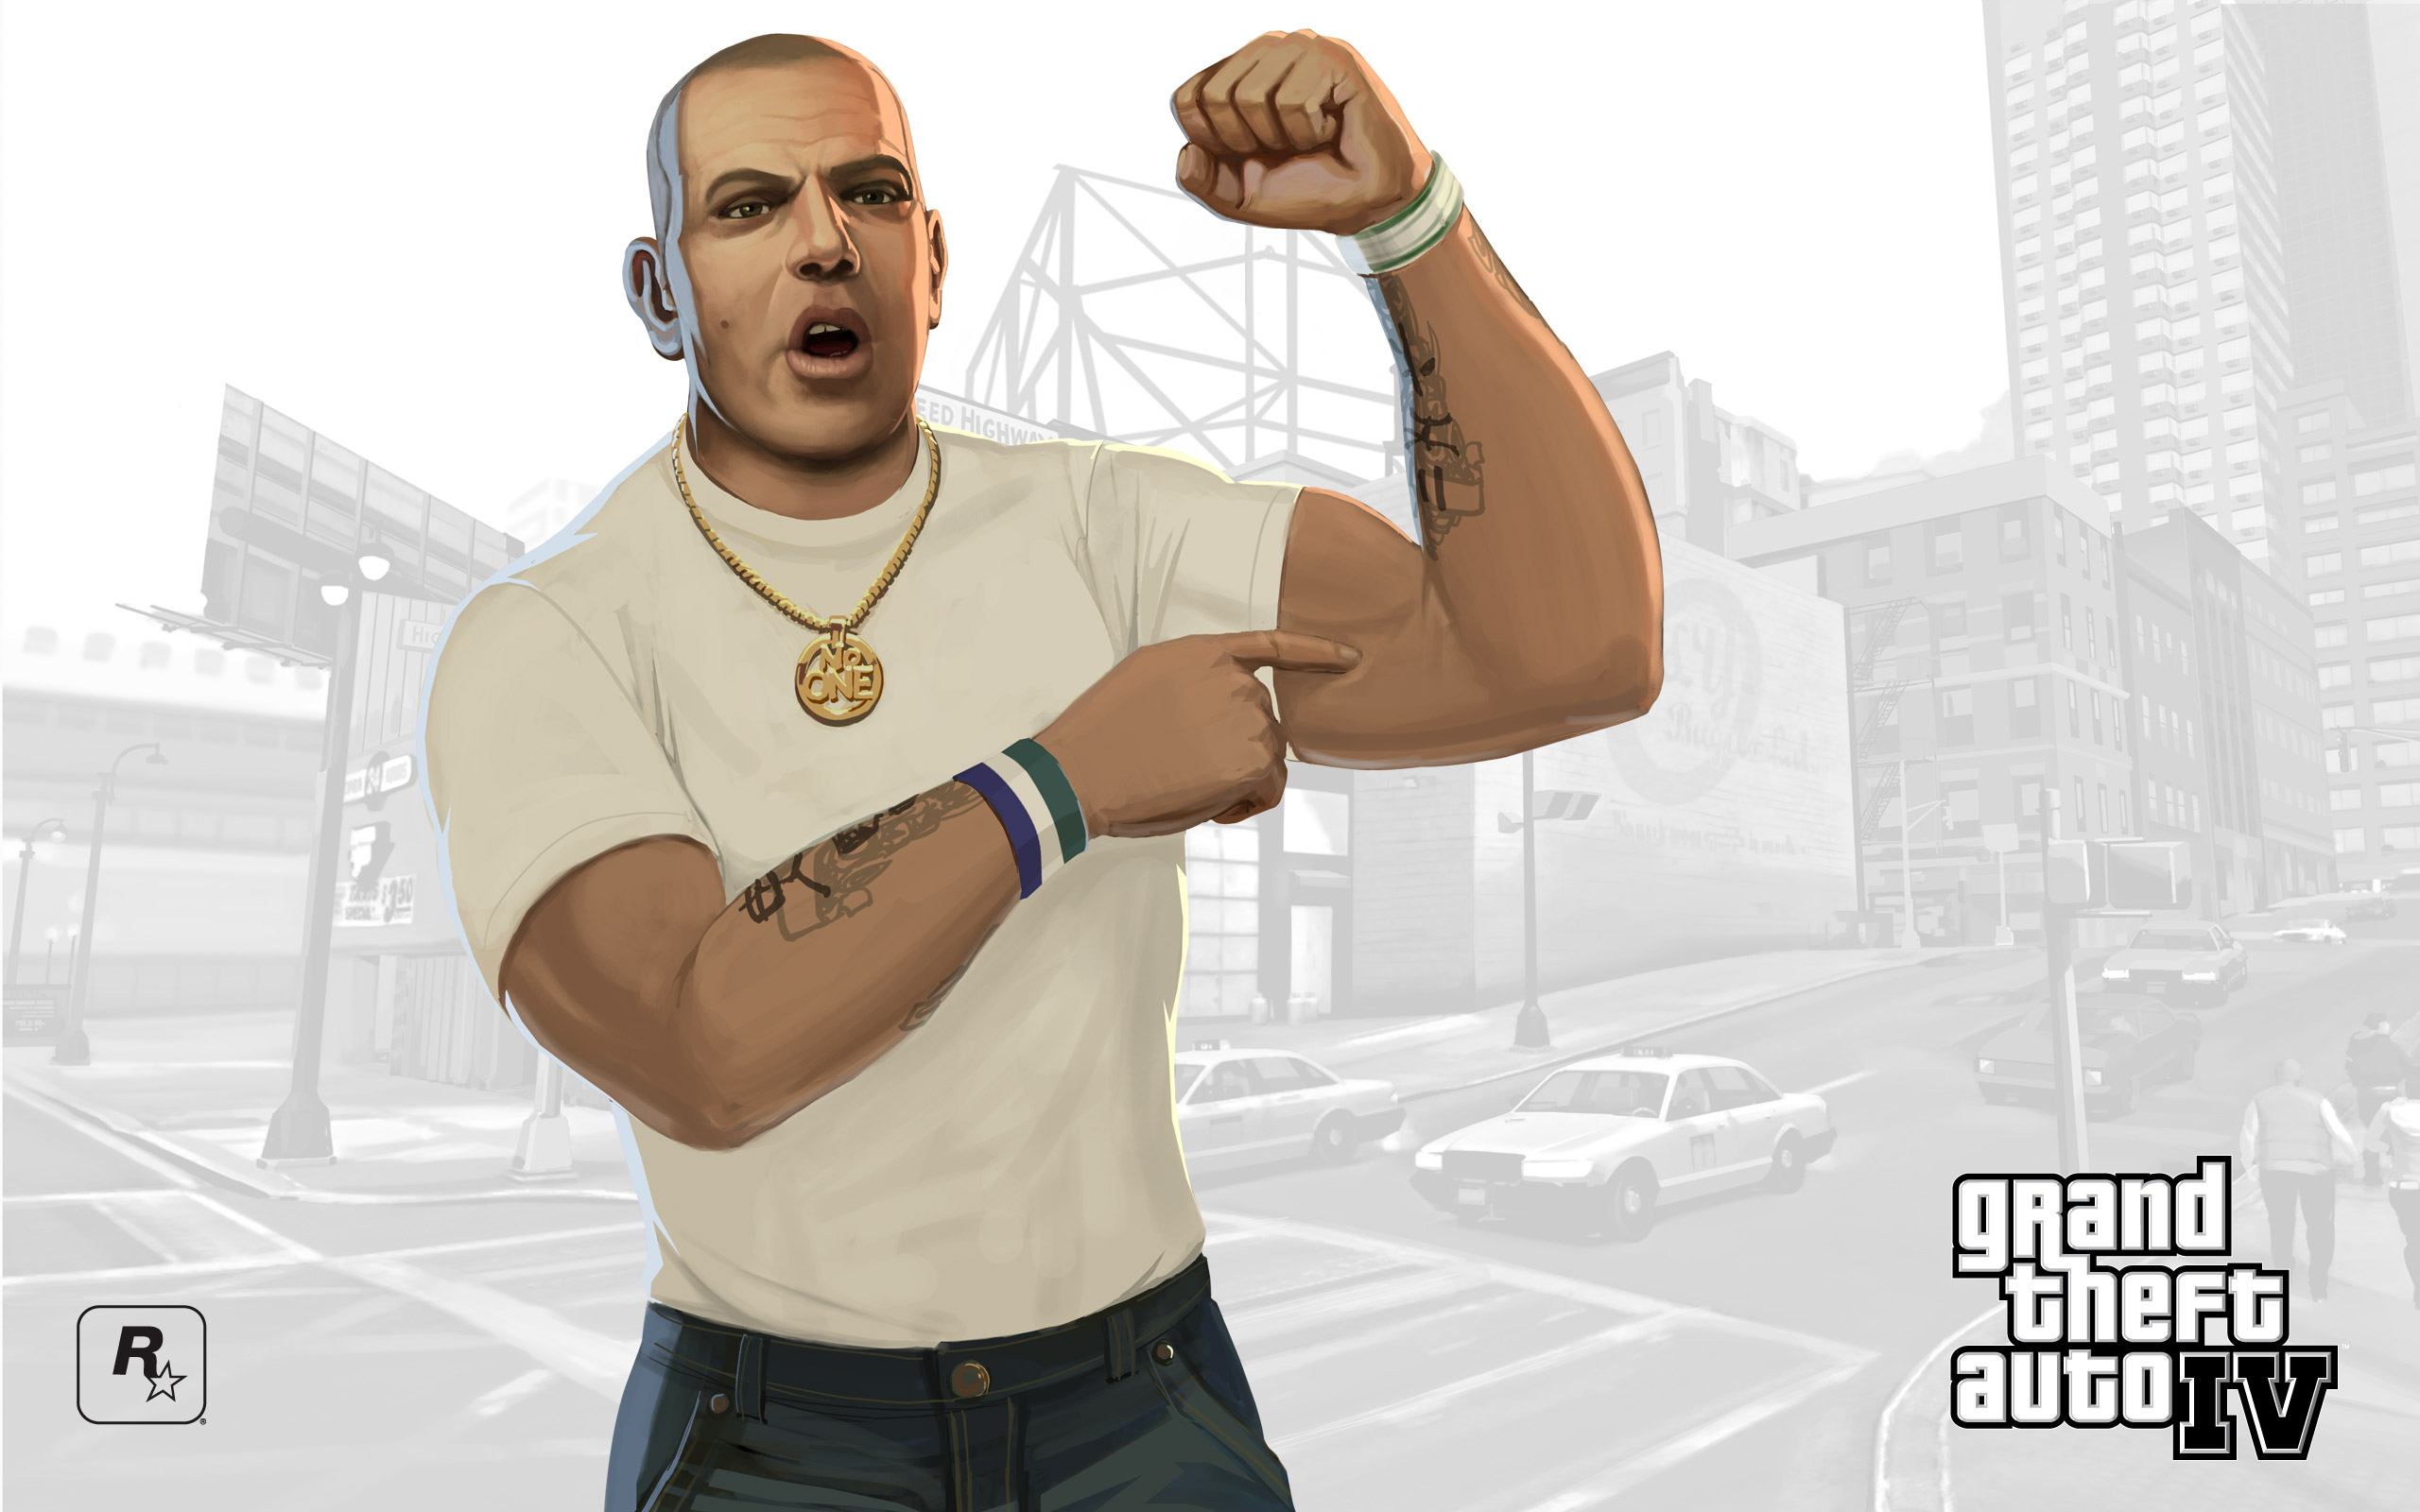 GTA IV Artworks & Wallpaper. Grand Theft Auto IV